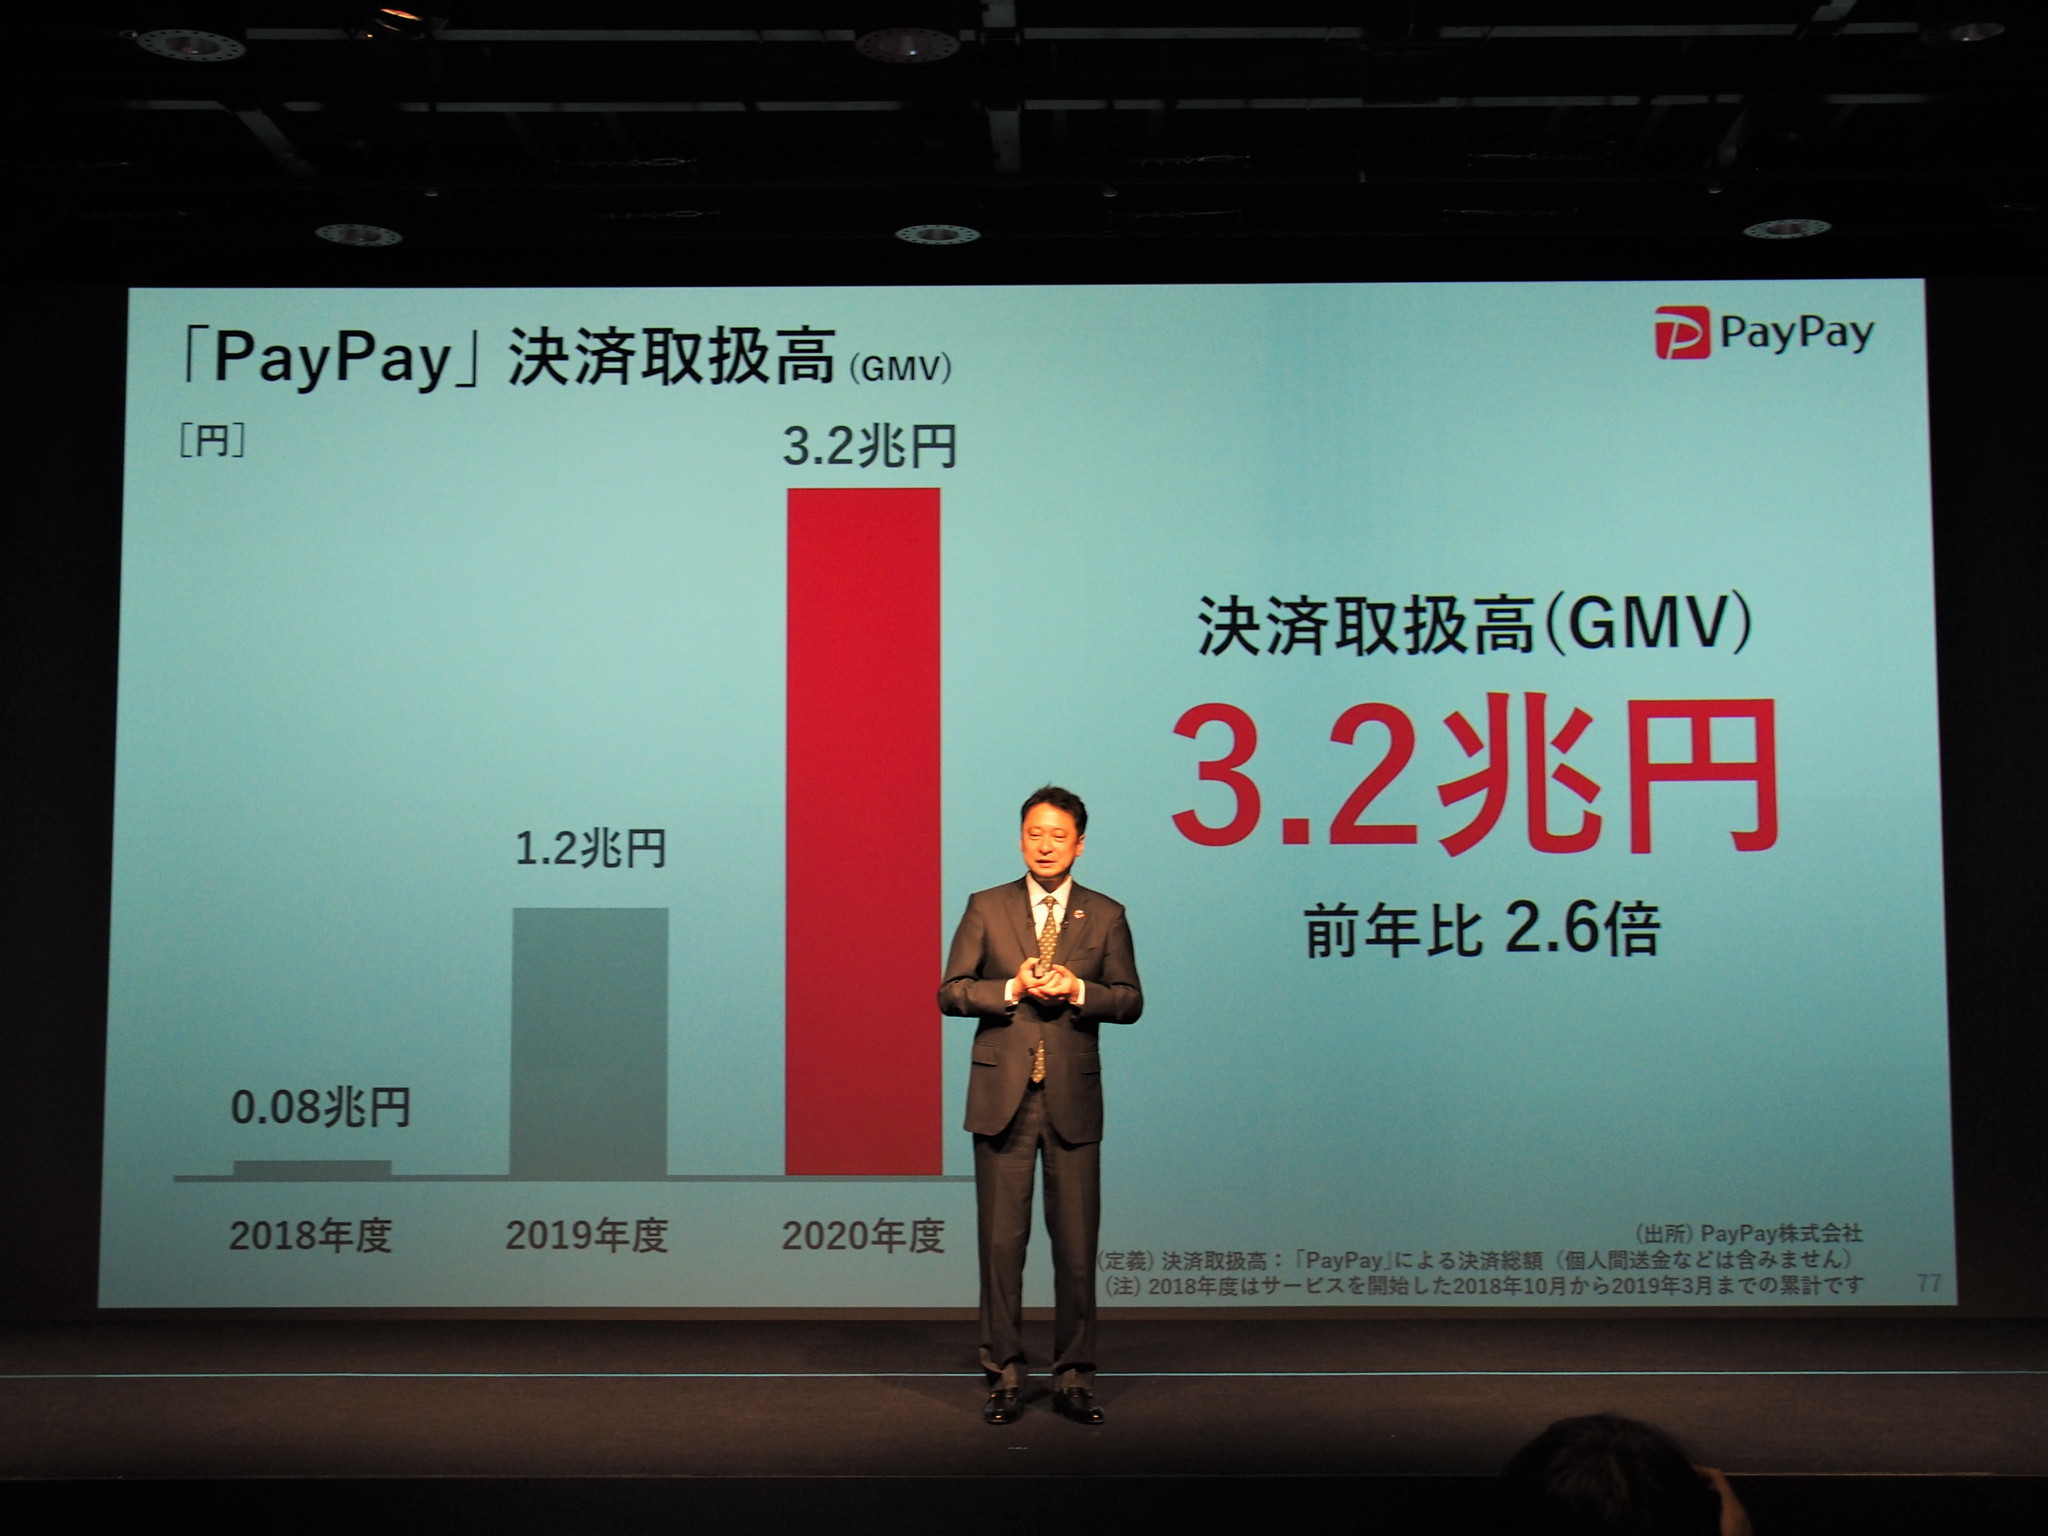 PayPayの決済取扱高も初めて公開。3.2兆円と前年から2.6倍の伸びを示しているという